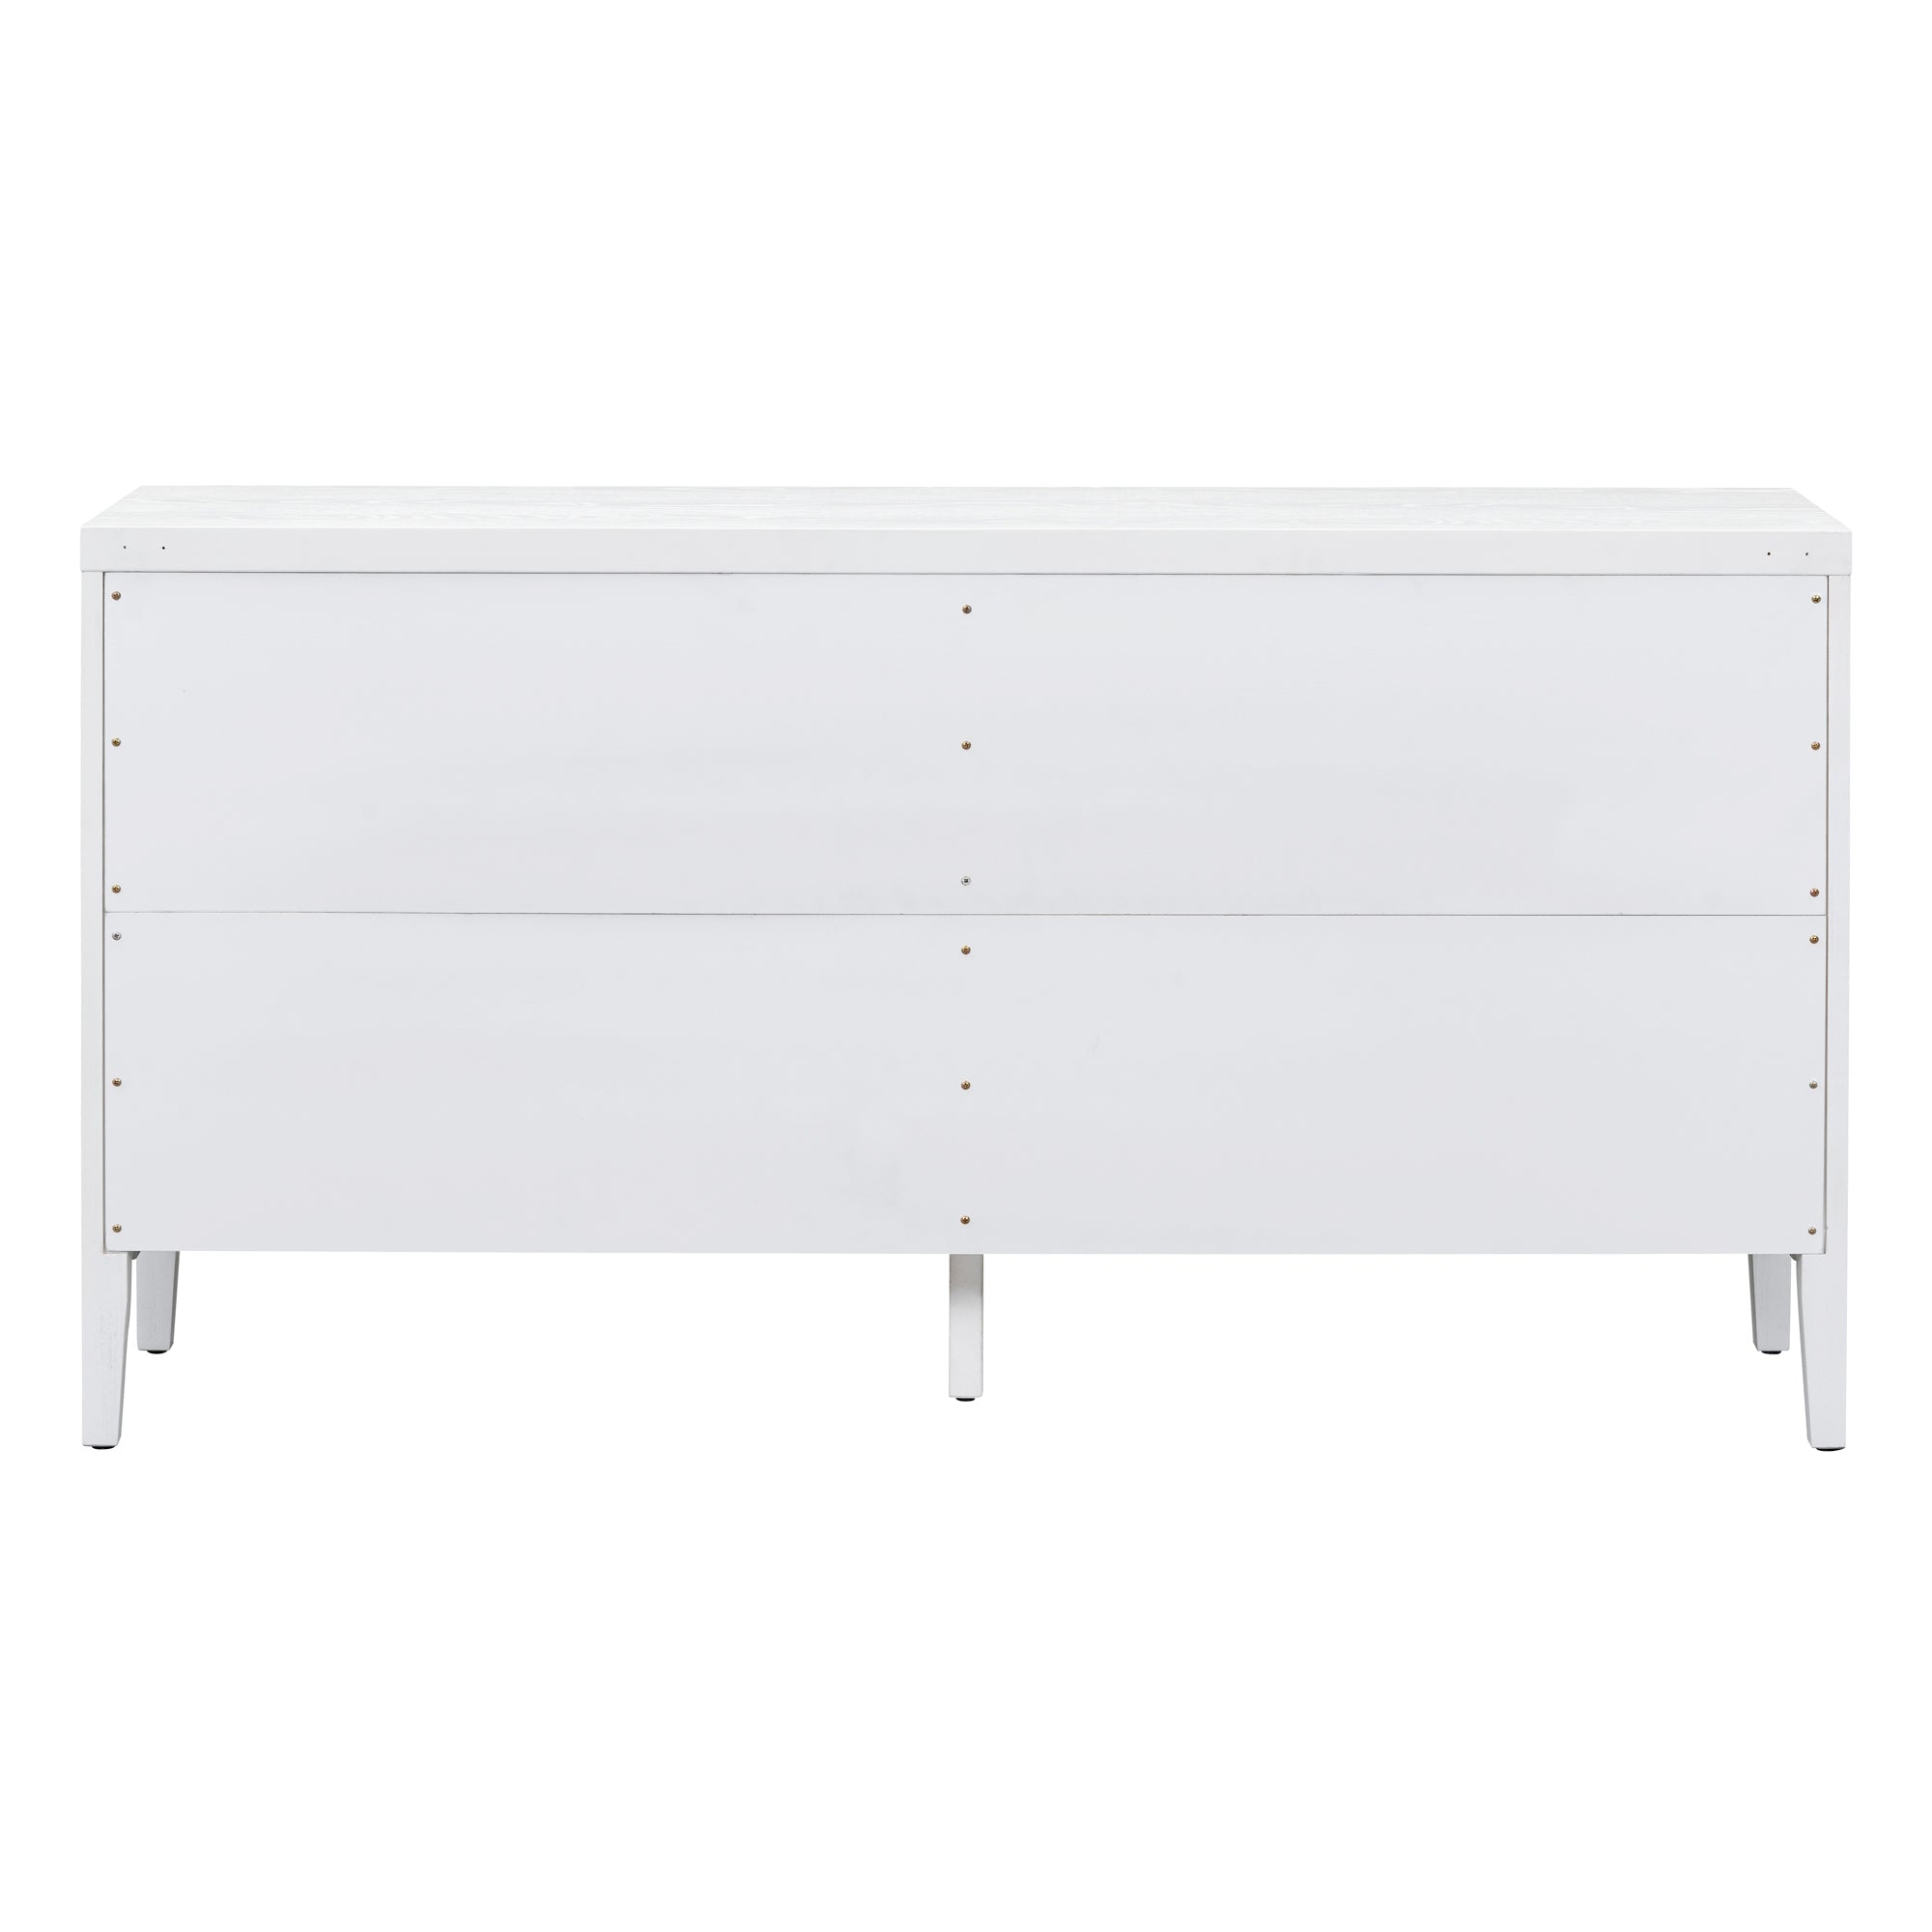 60" White Retro Console Table Sideboard